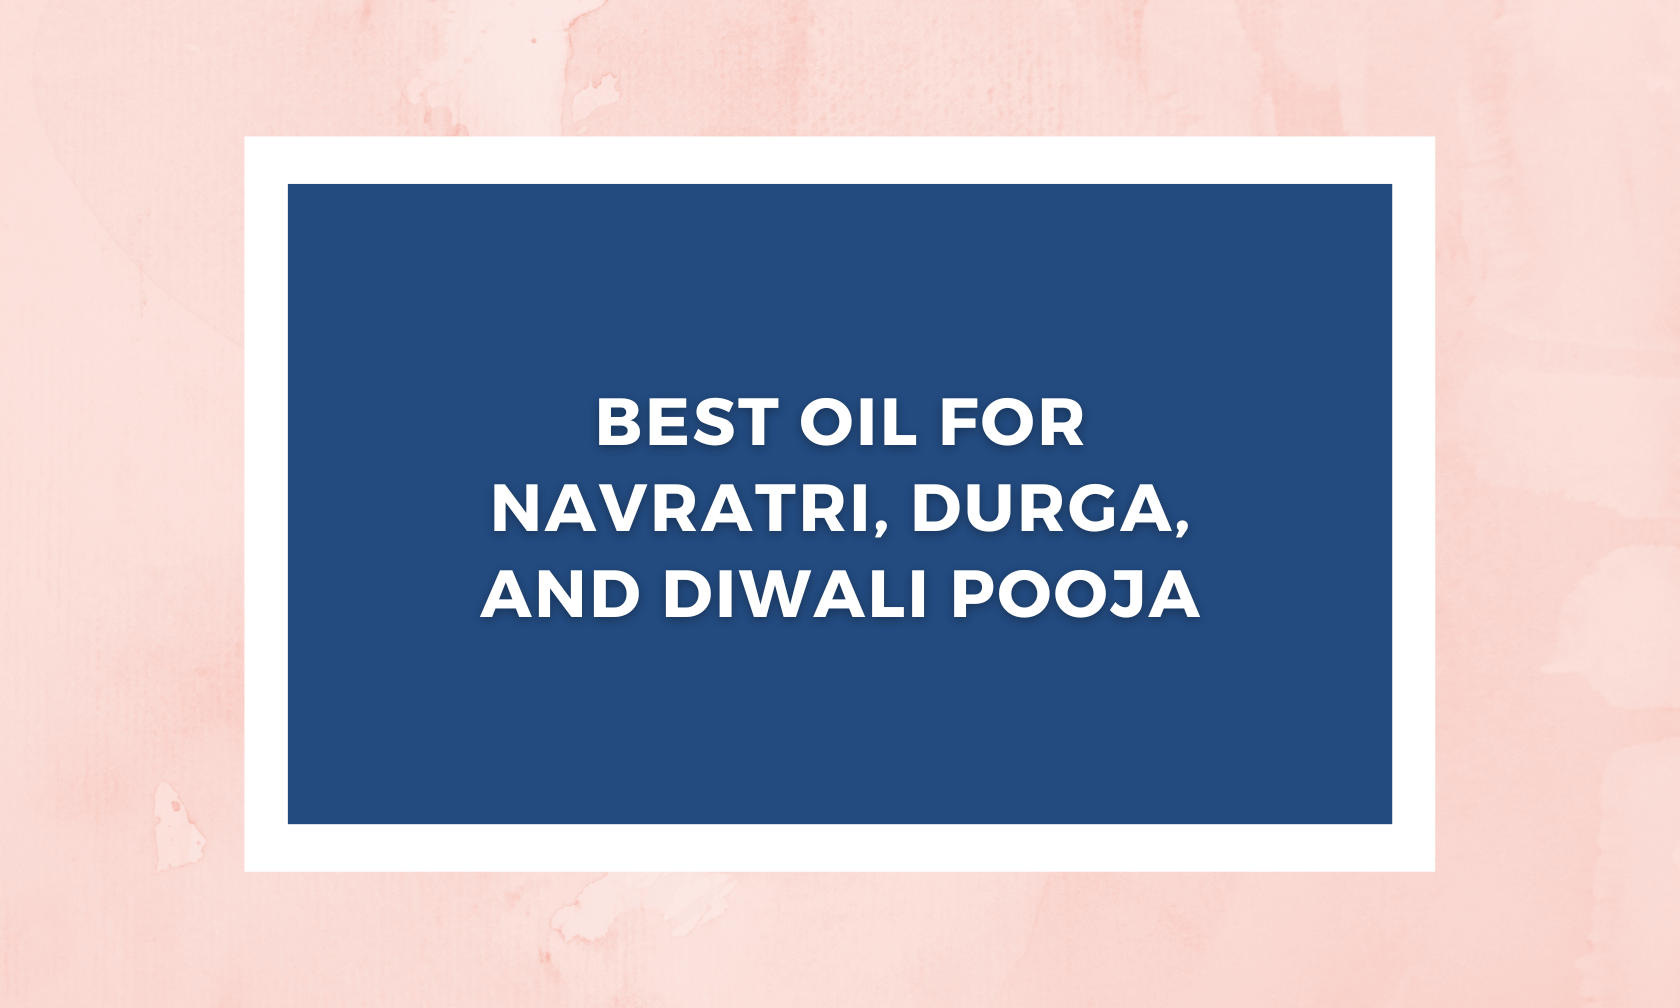 Best oil for Navratri, Durga, and Diwali pooja